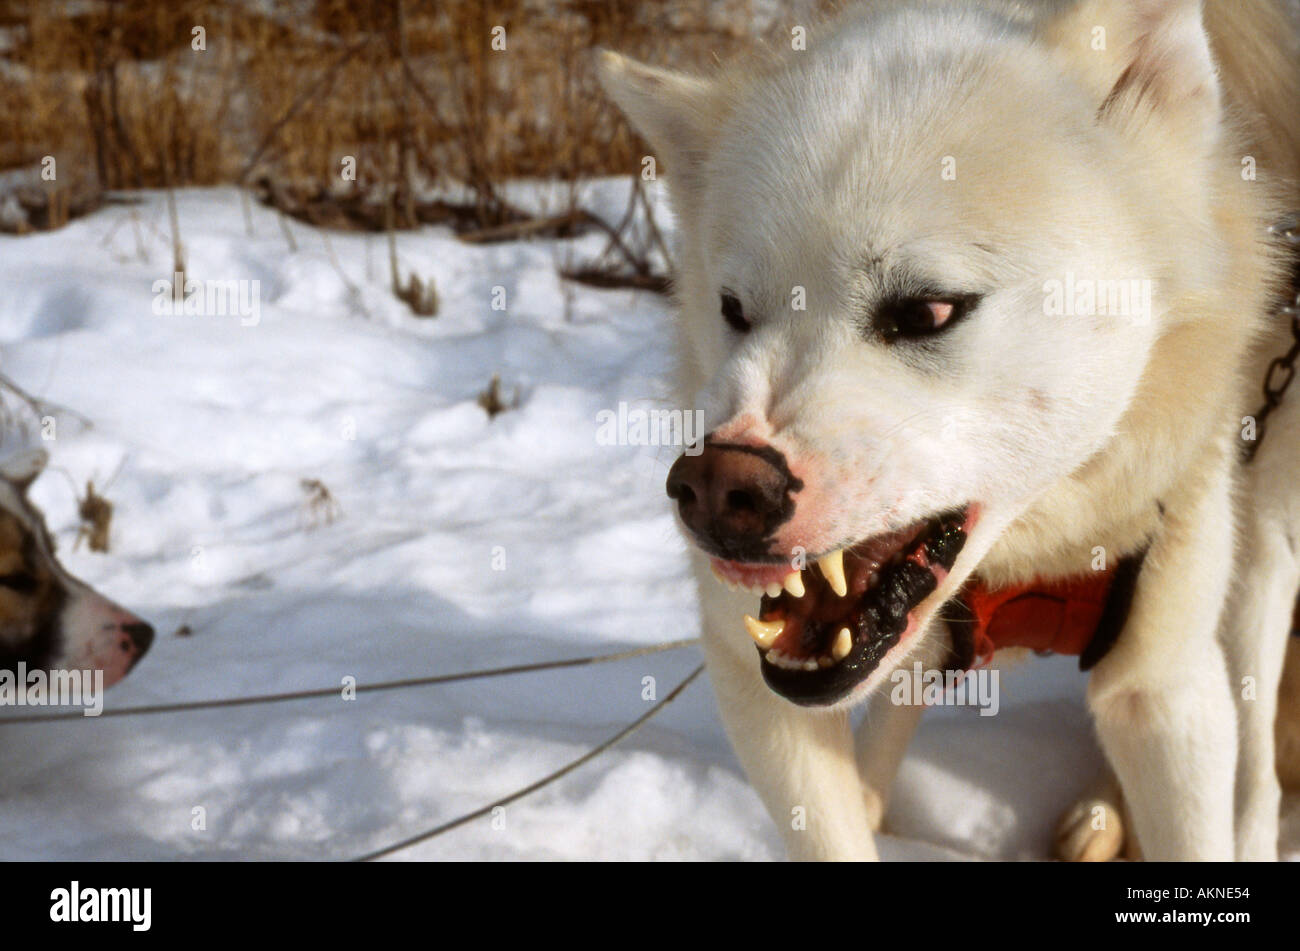 Les Inuits canadiens chien montrant il s domination Boundary Waters Canoe Area au Minnesota Banque D'Images